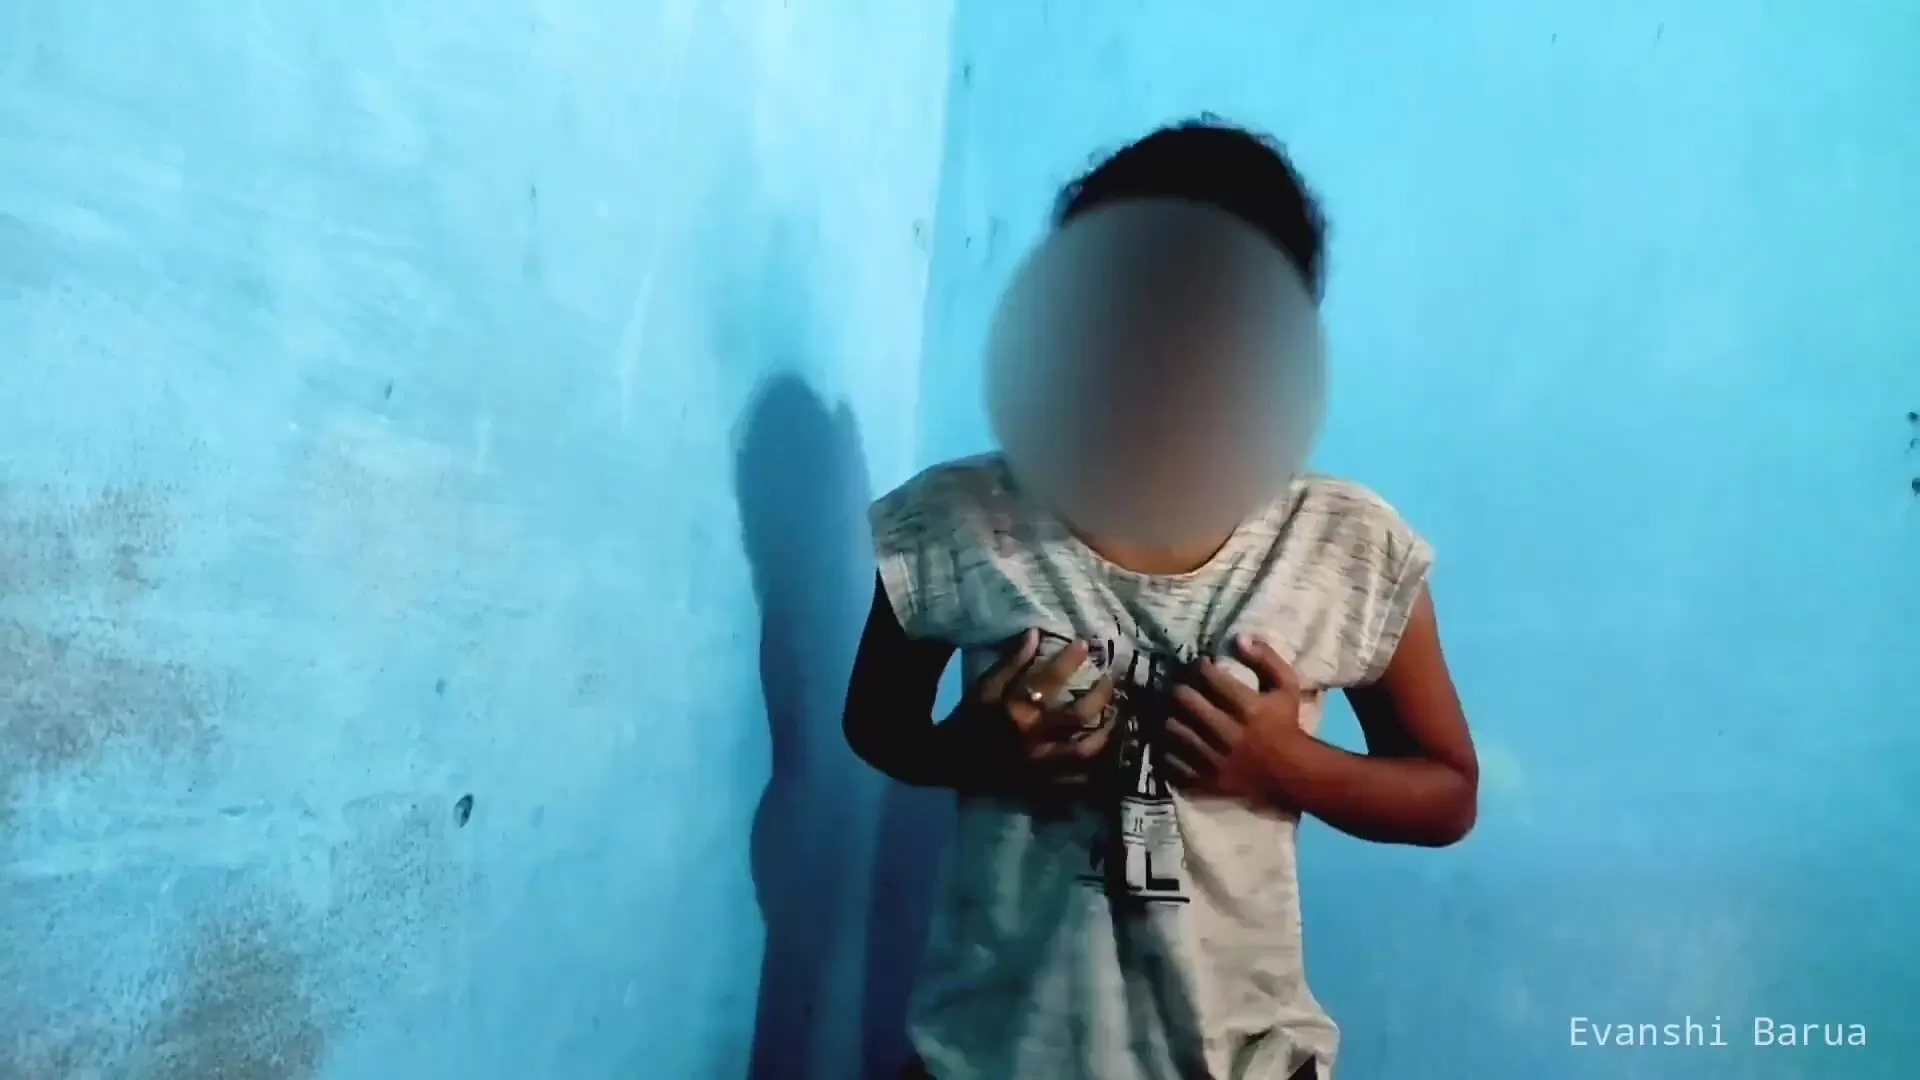 Horney Evanshi Barua Assamese Girl Solo Mastrubation watch online pic photo pic